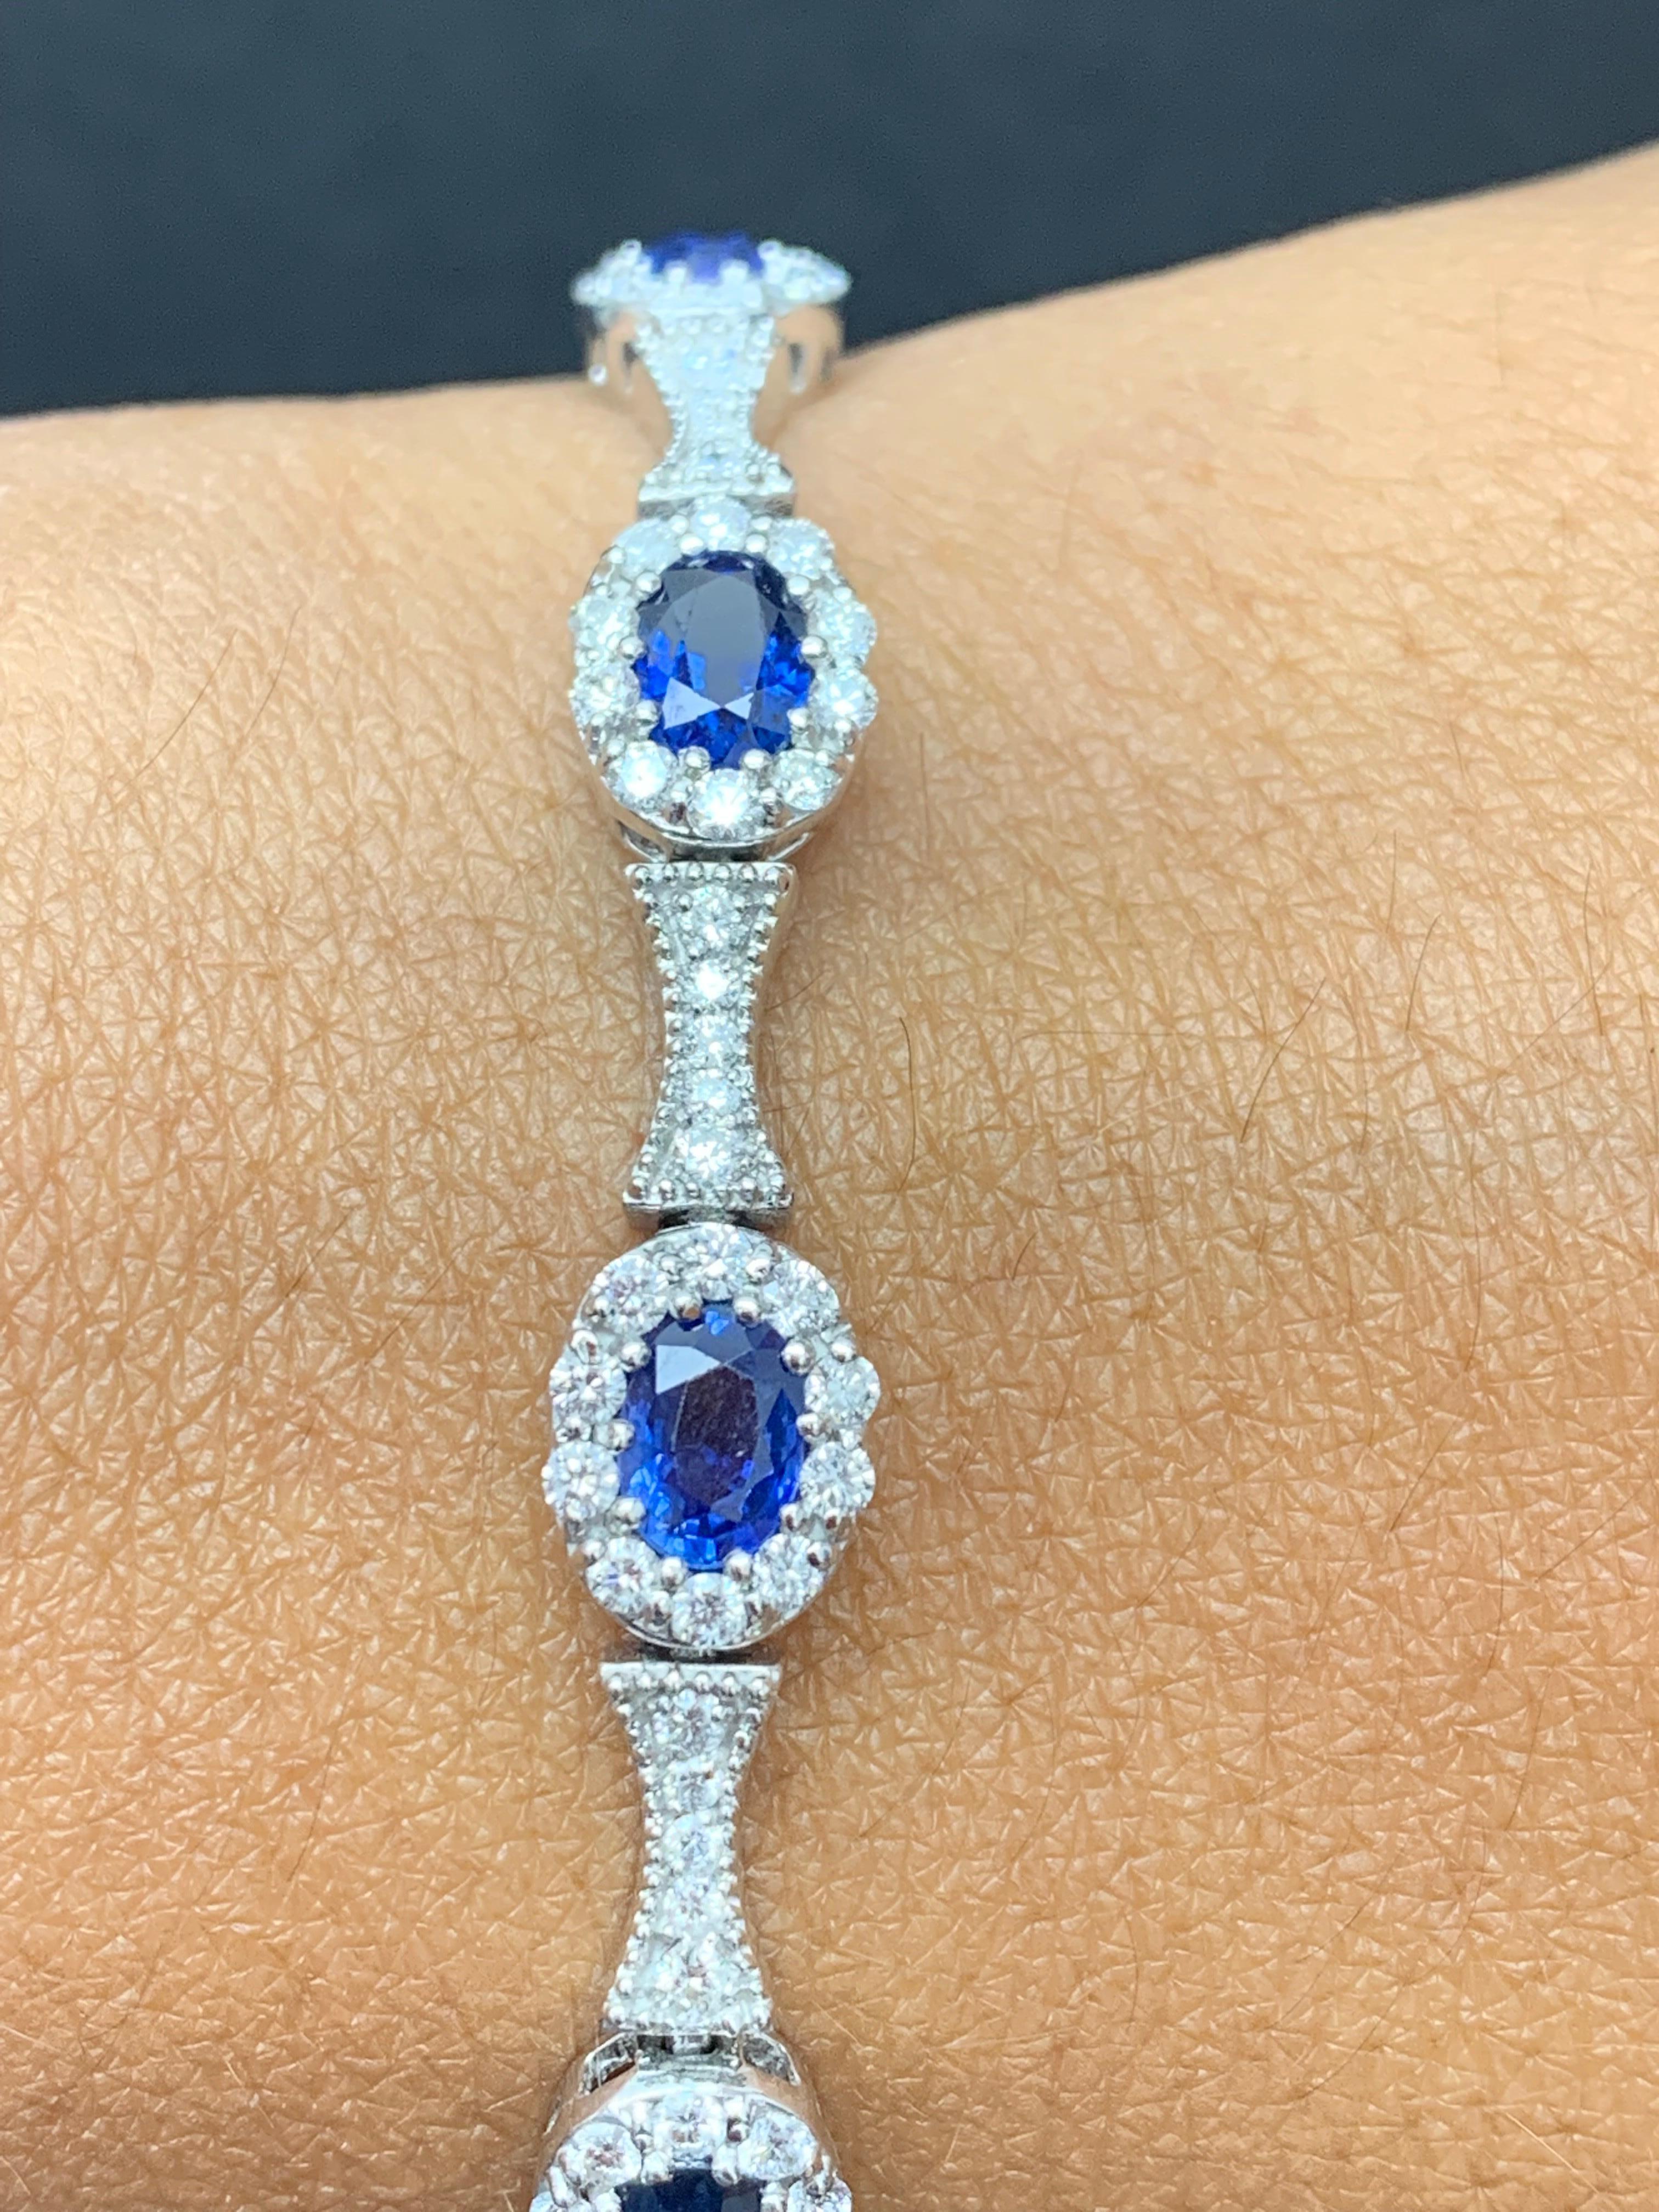 6.19 Carat Oval Cut Blue Sapphire Diamond Bracelet in 14K White Gold For Sale 6